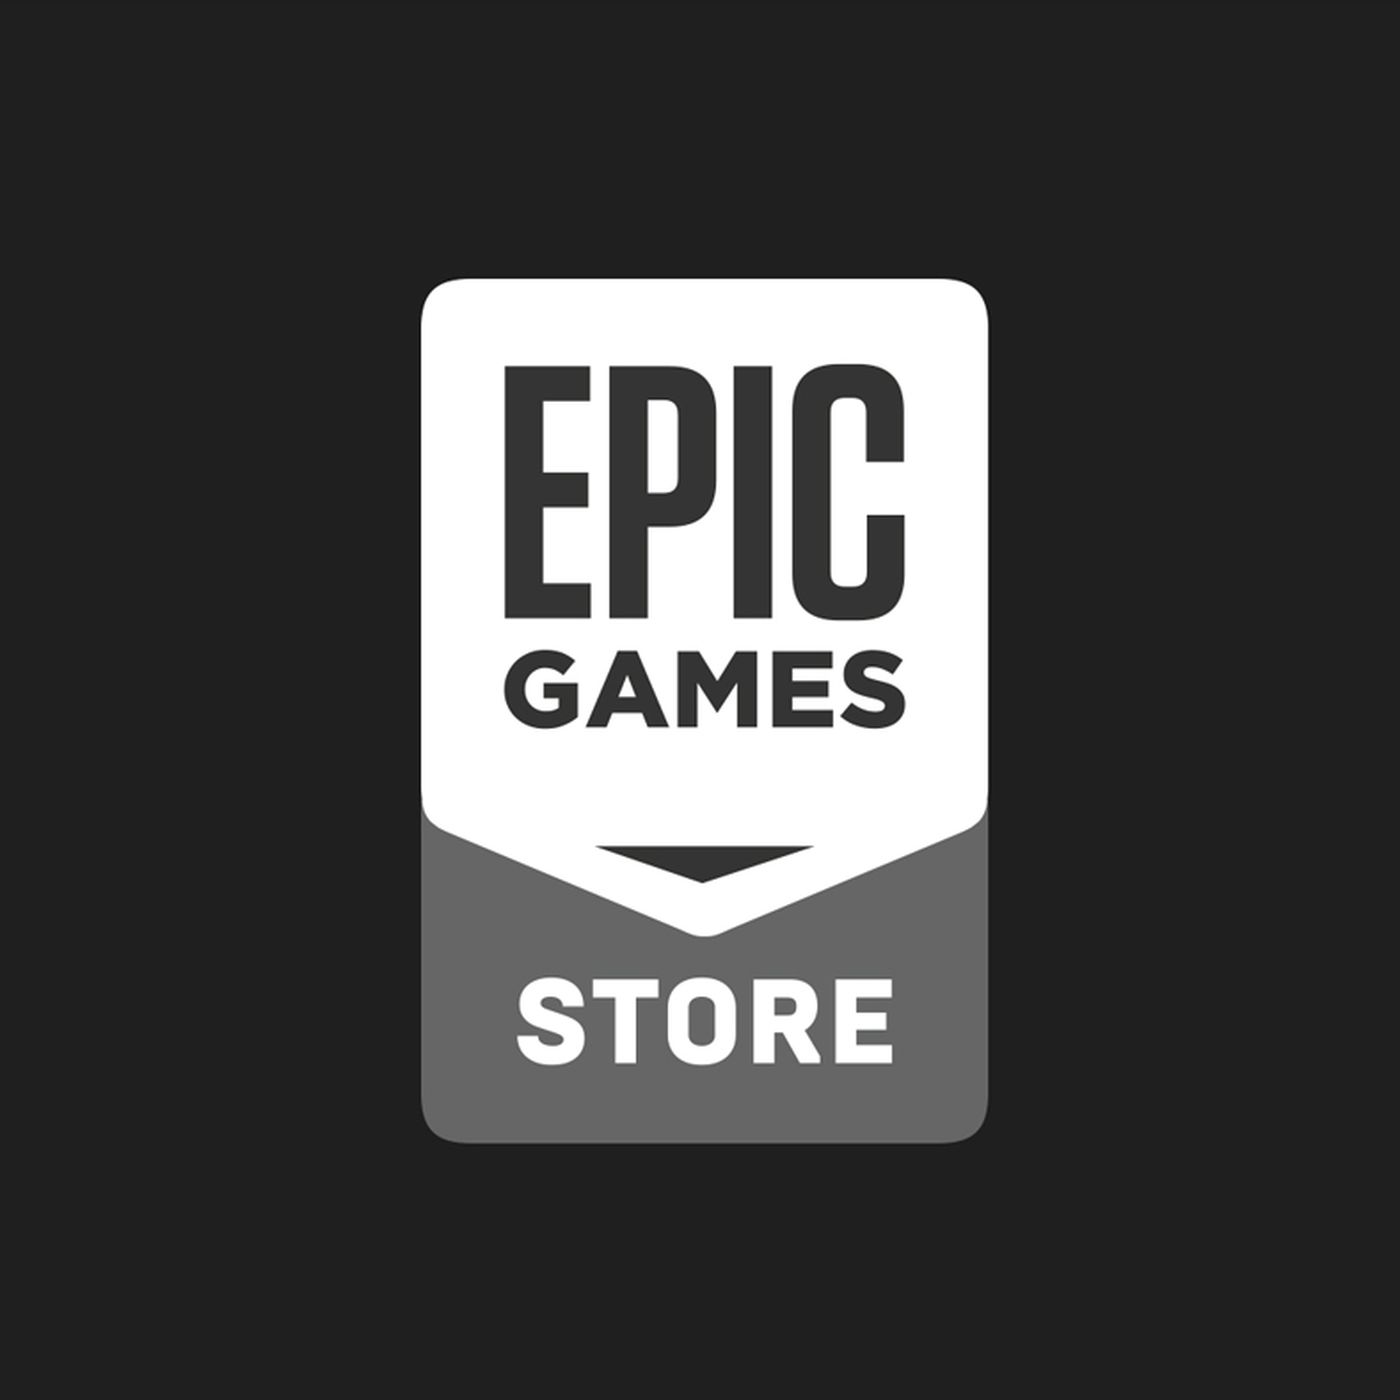 Epic Games Store dostaje now funkcj. Steam ma j ju od dawna